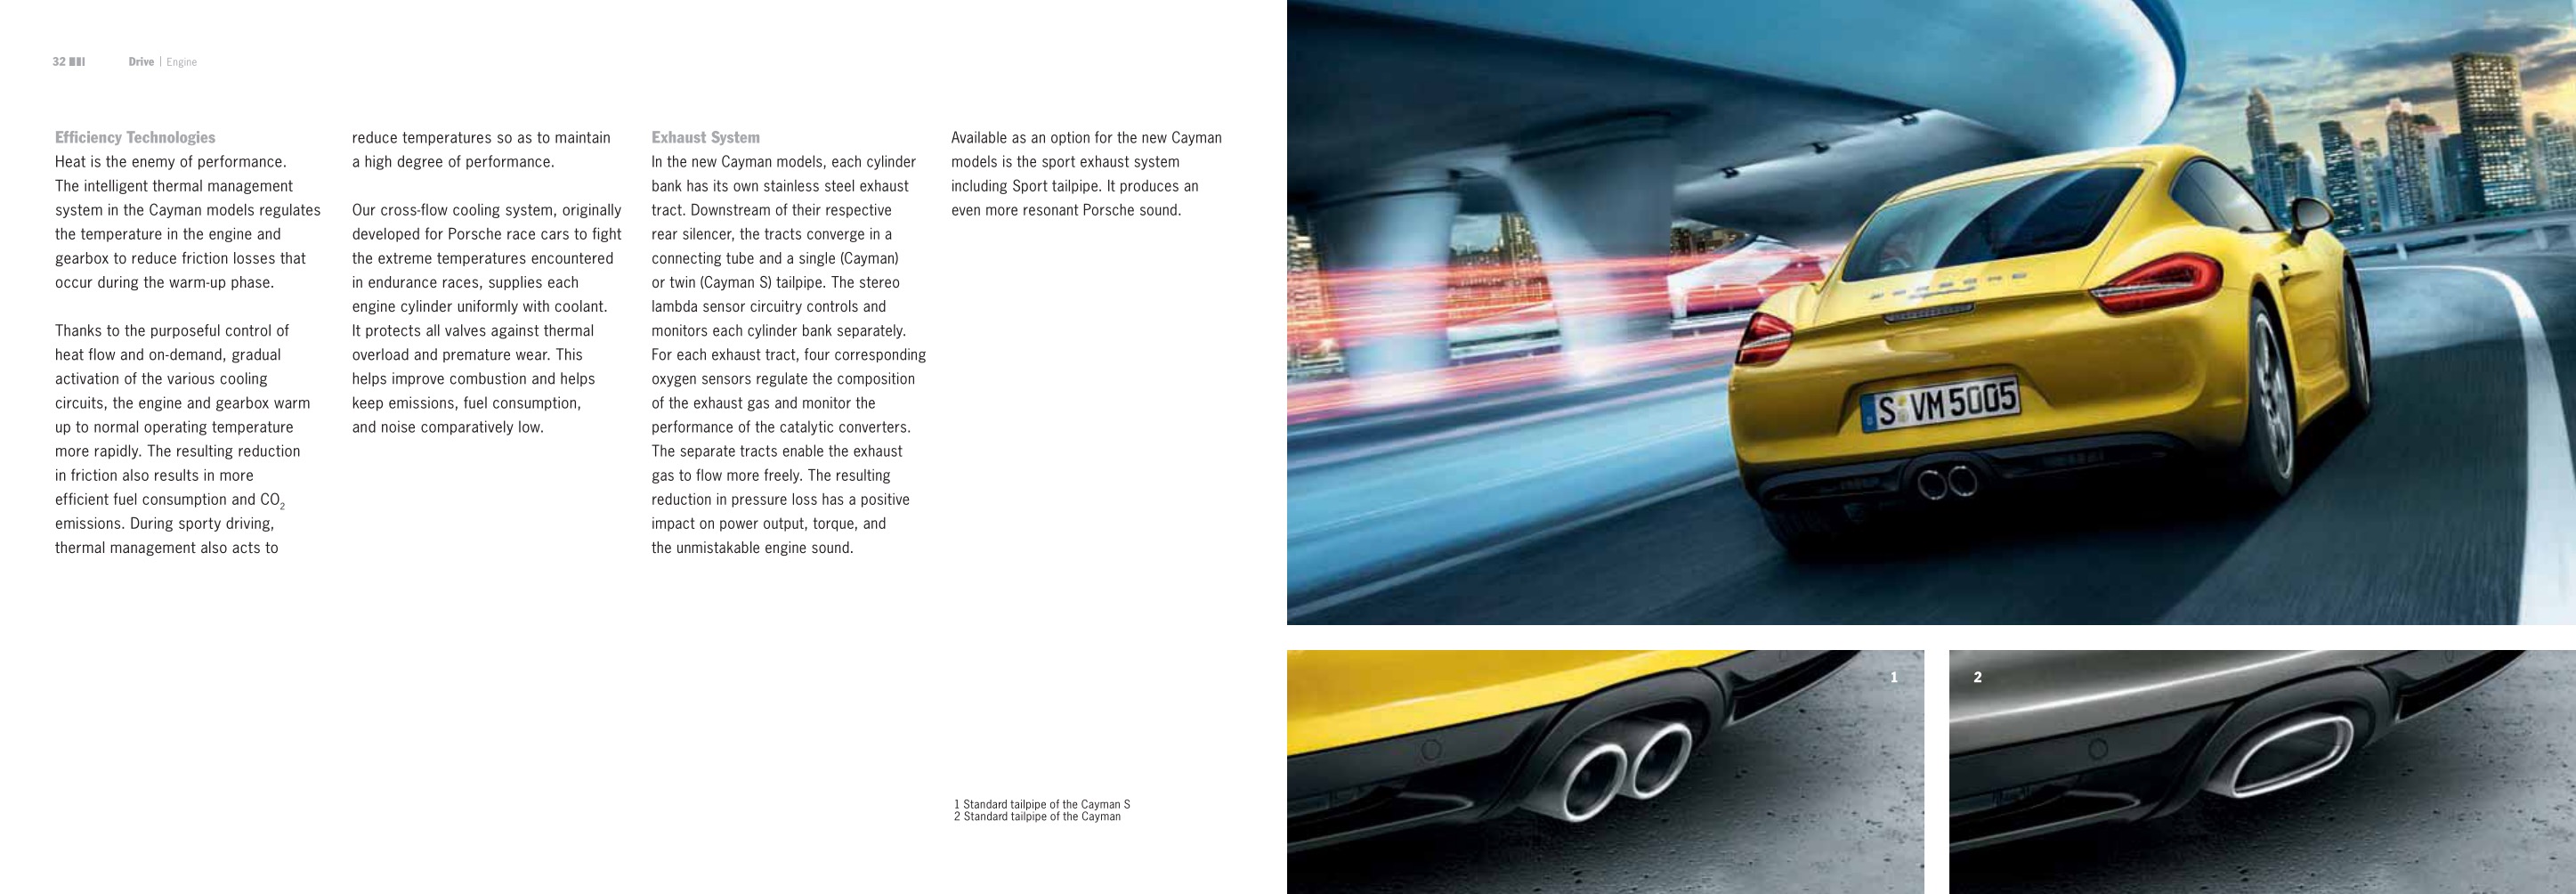 2014 Porsche Cayman Brochure Page 25